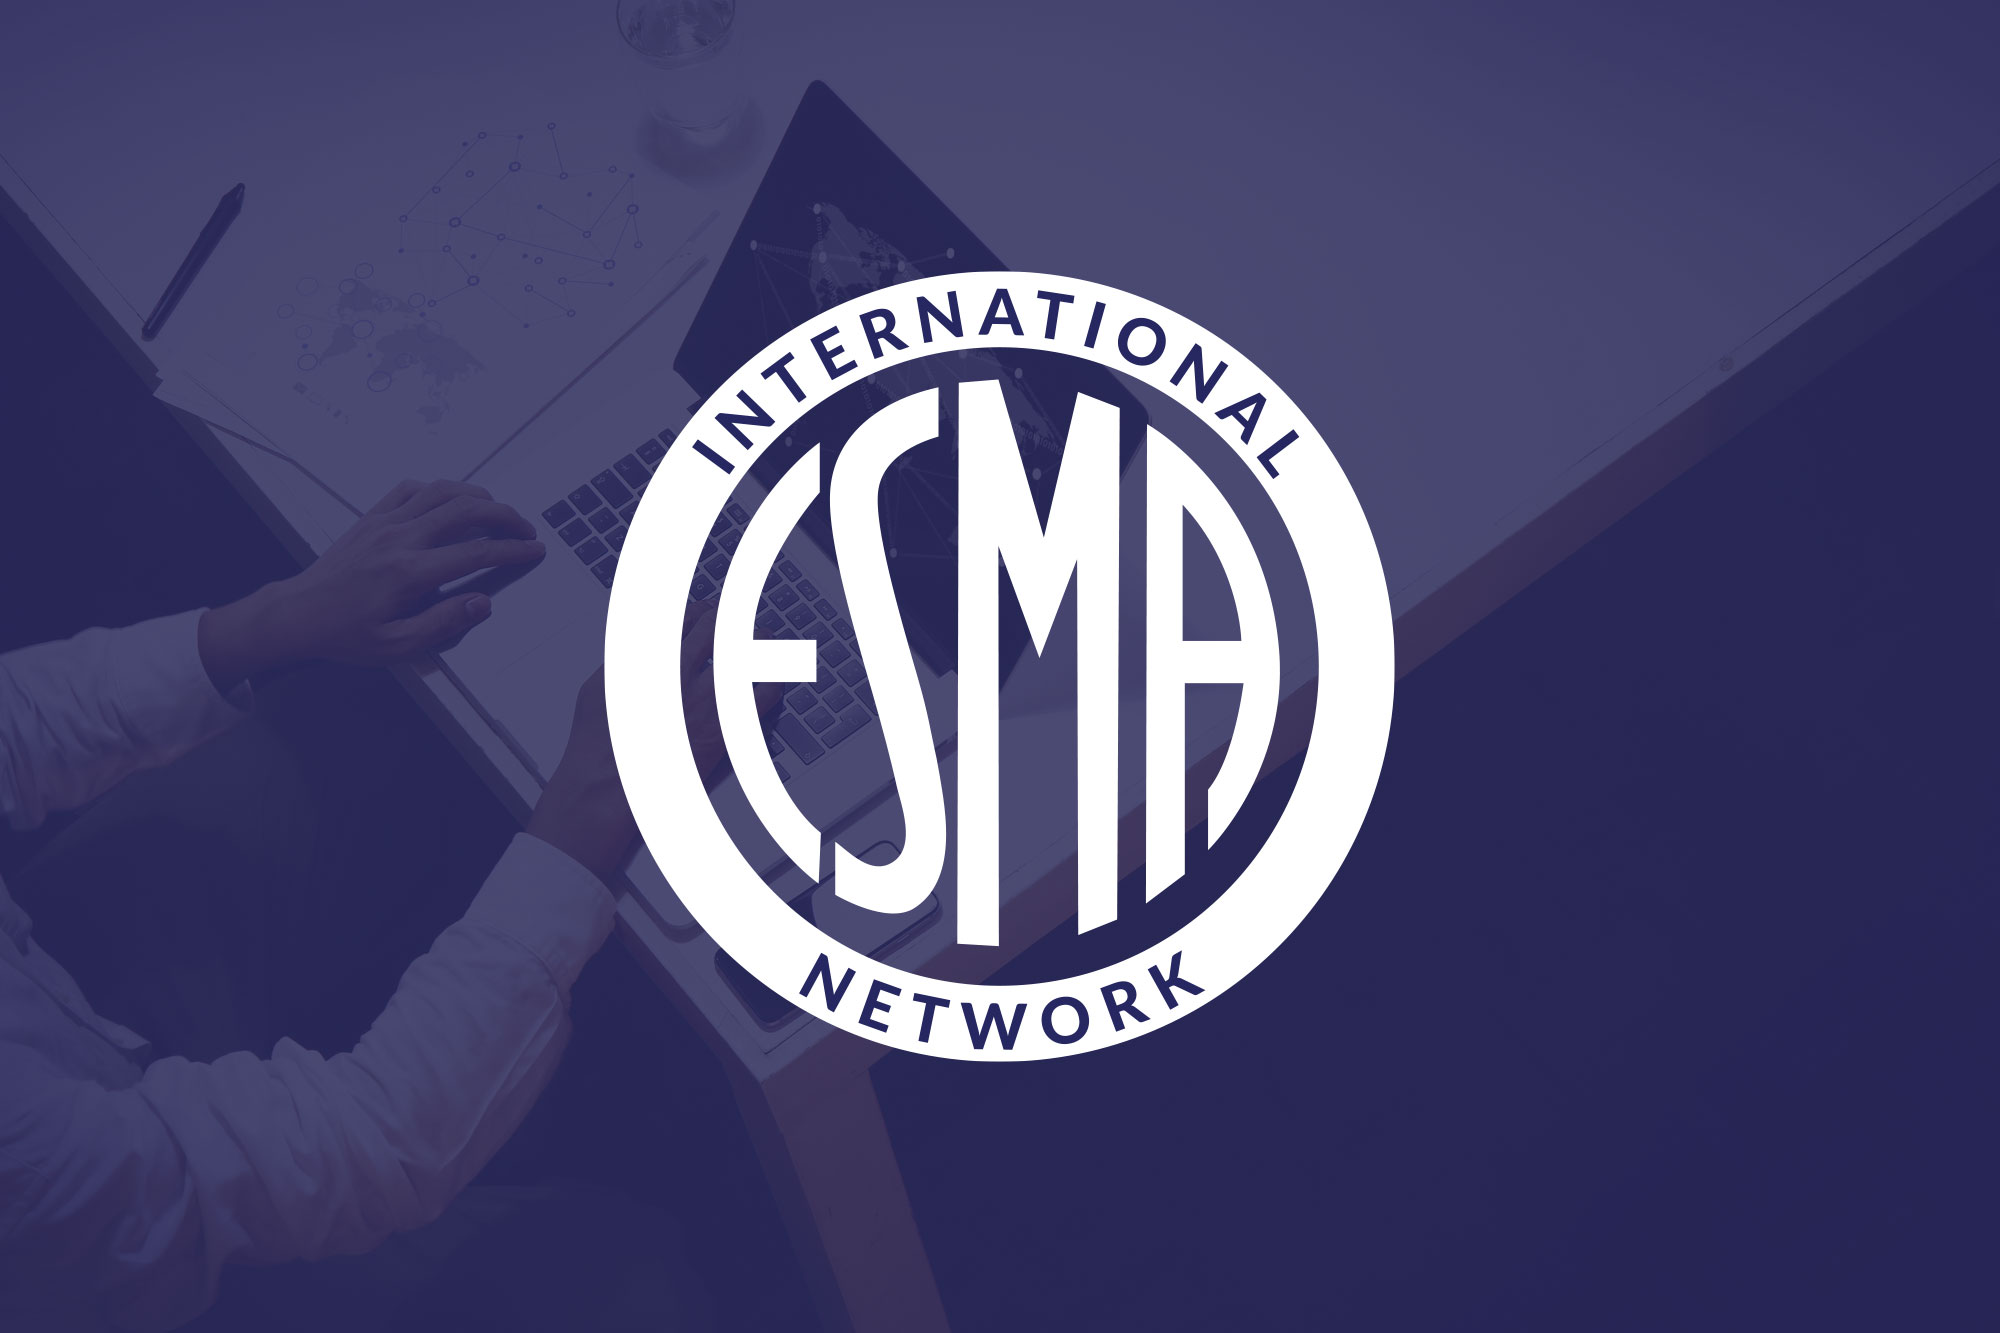 ESMA Webinar with Greg Seminara